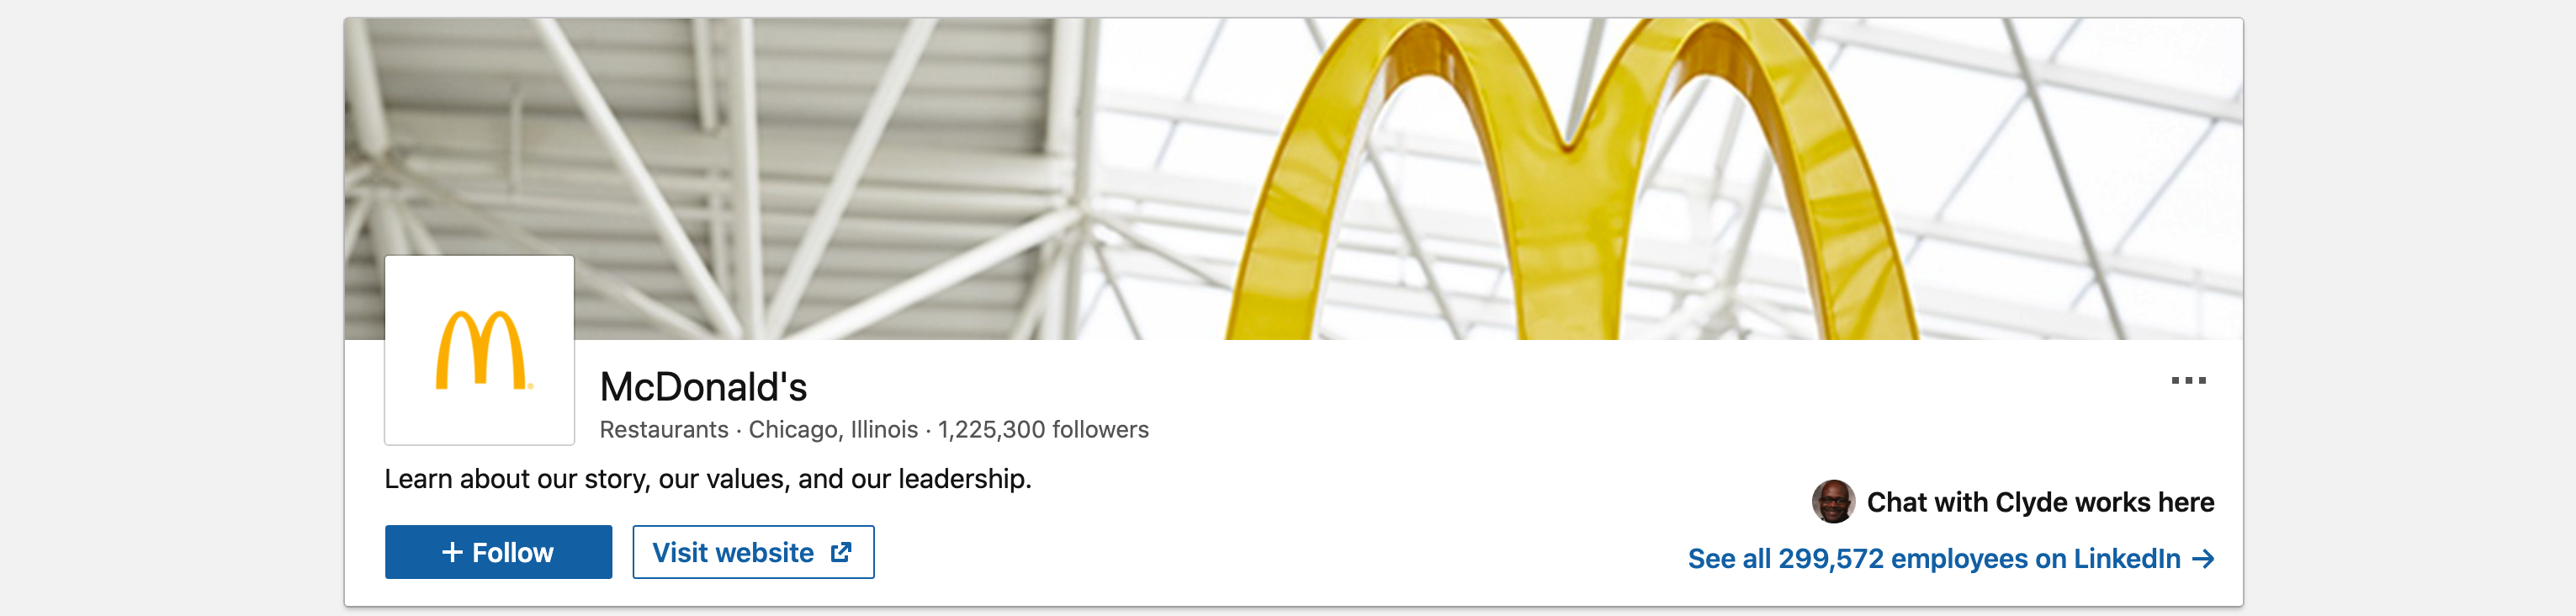 McDonald's on LinkedIn